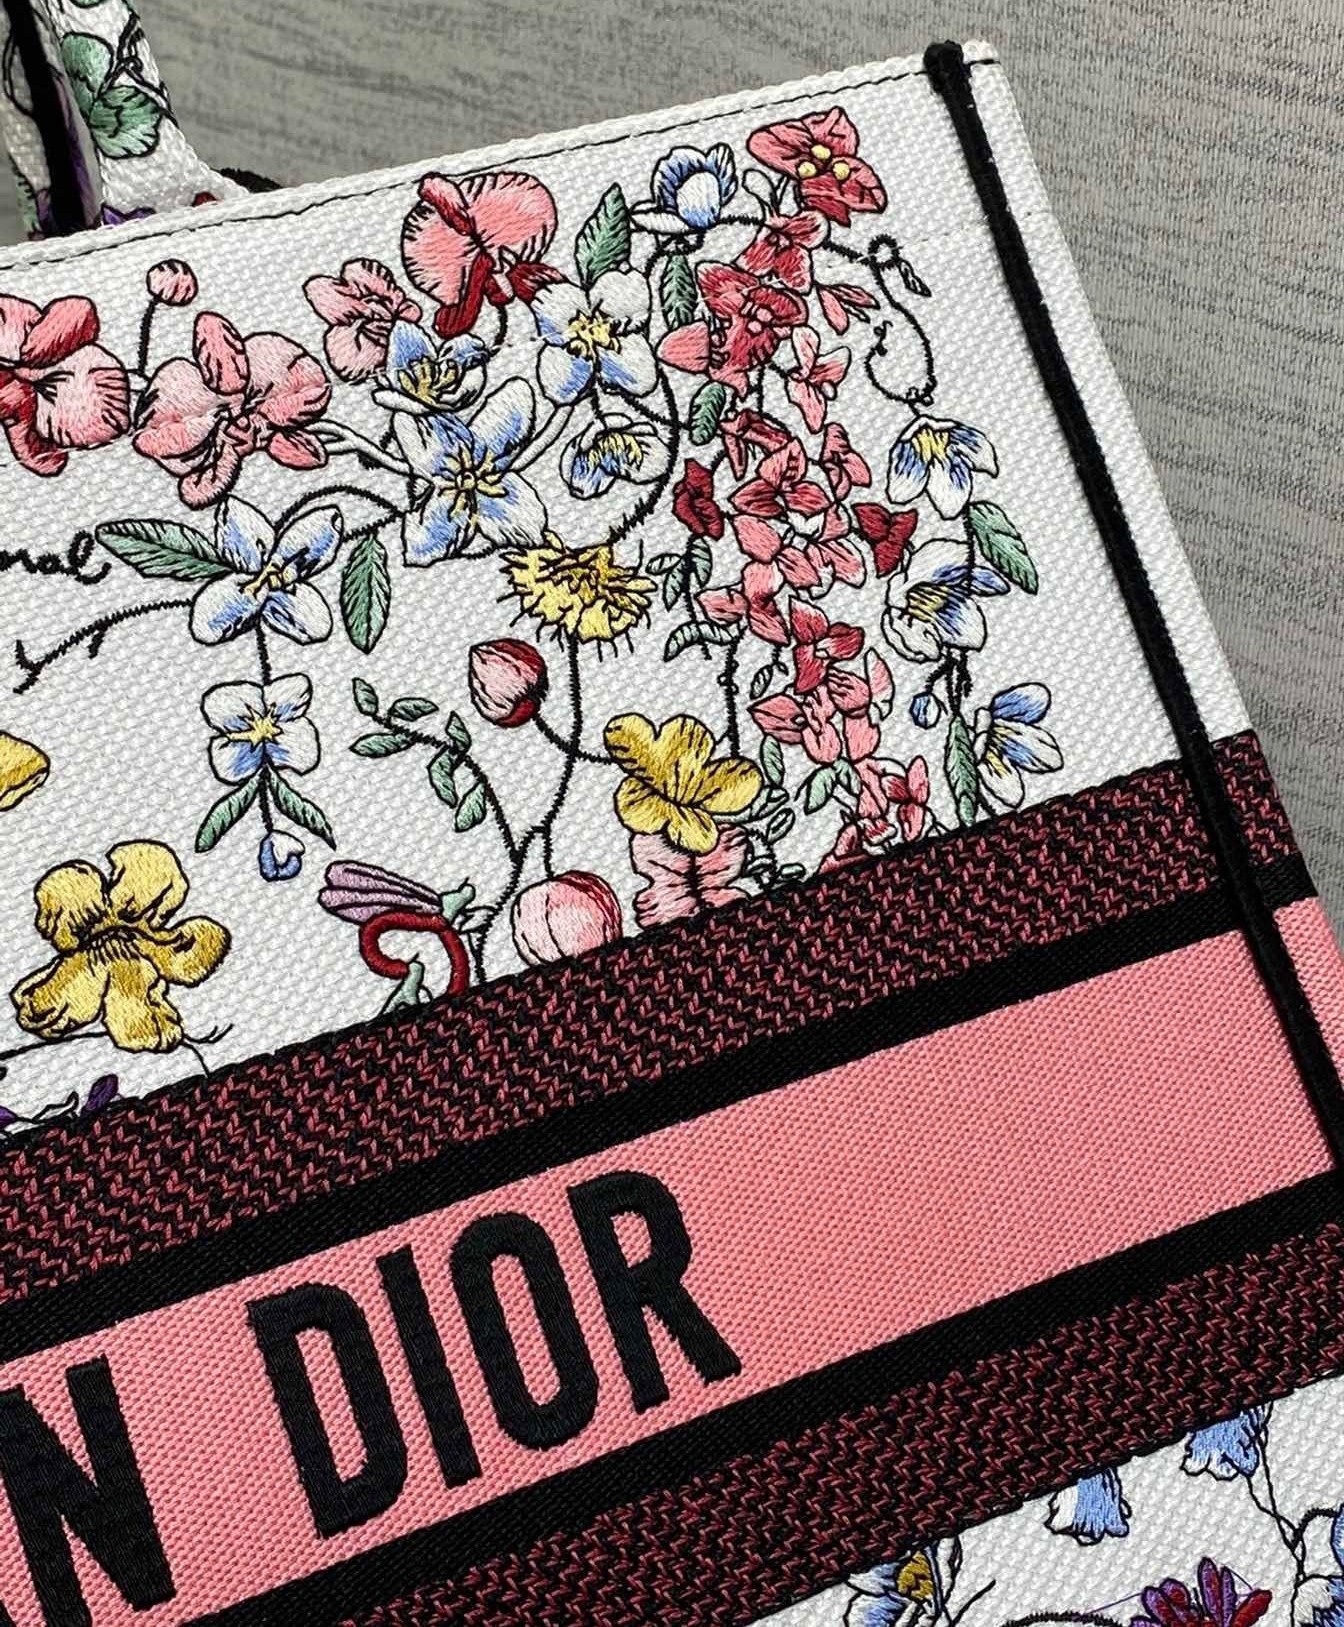 Dior Large Book Tote Bag In White Multicolor Florilegio Embroidery 461